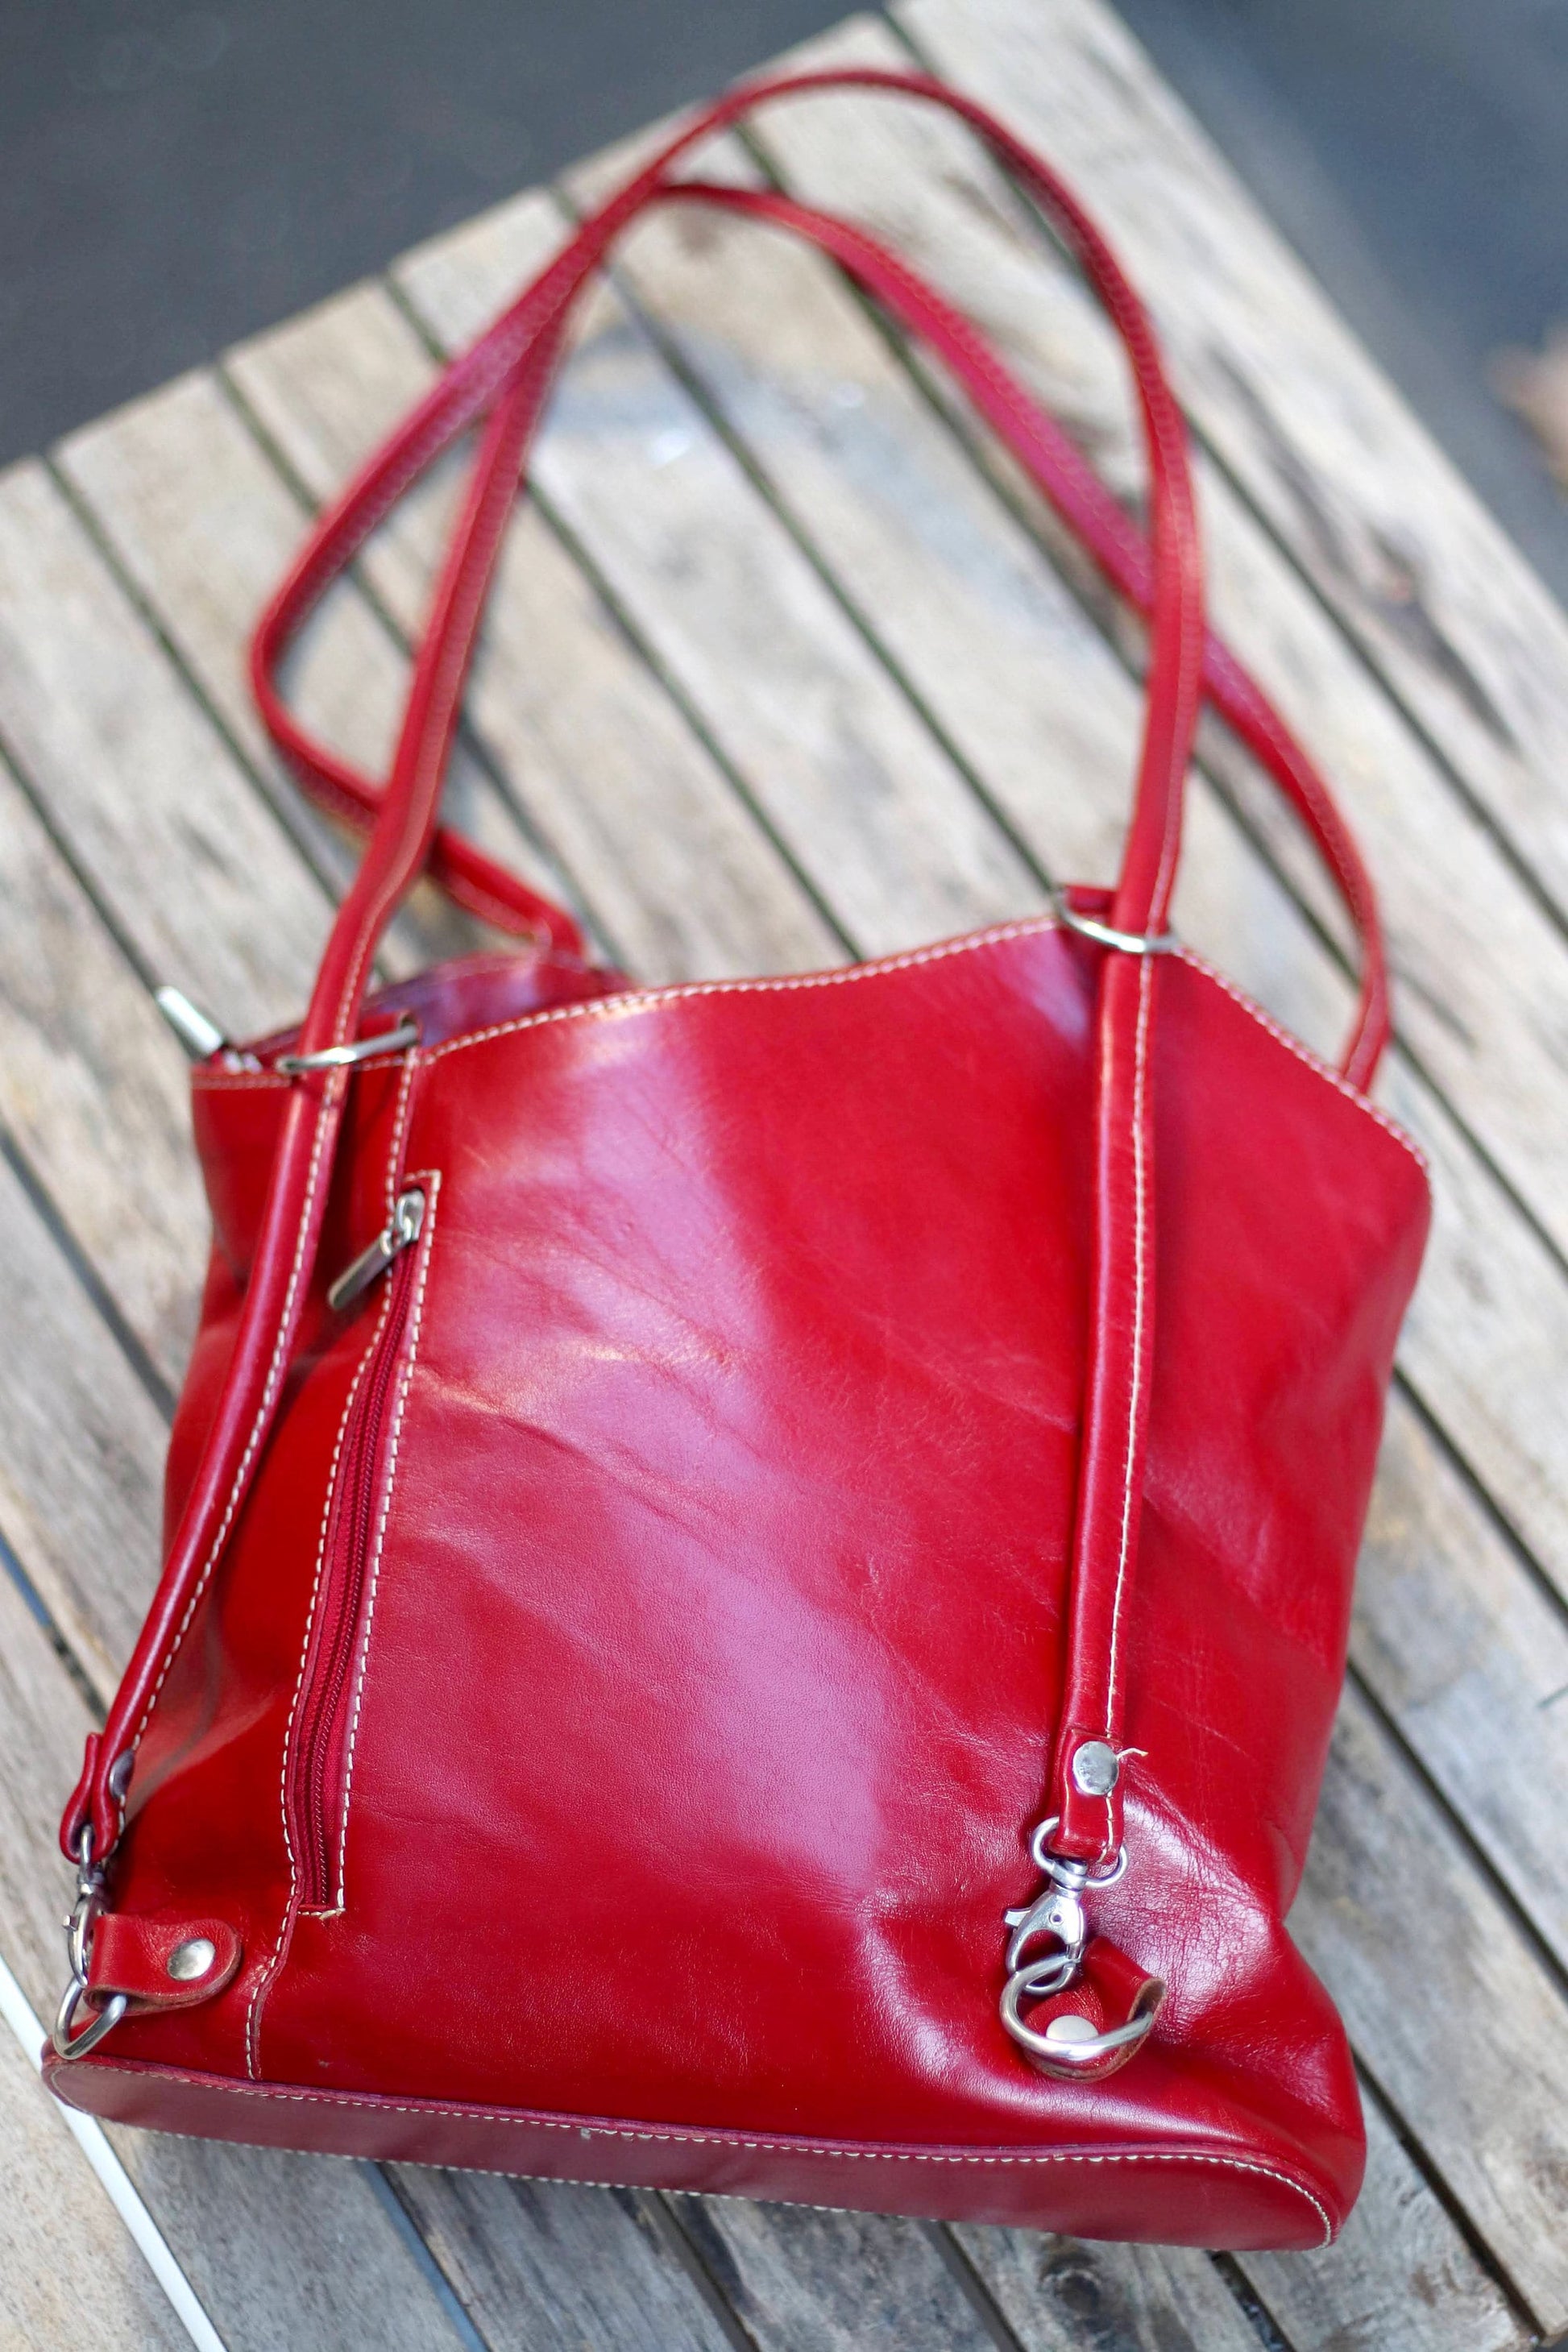 70s Red Leather Bag| Vintage Minimalist Shoulderbag| Women's Chic Handbag|Minimalist Purist functional shoulderbag|